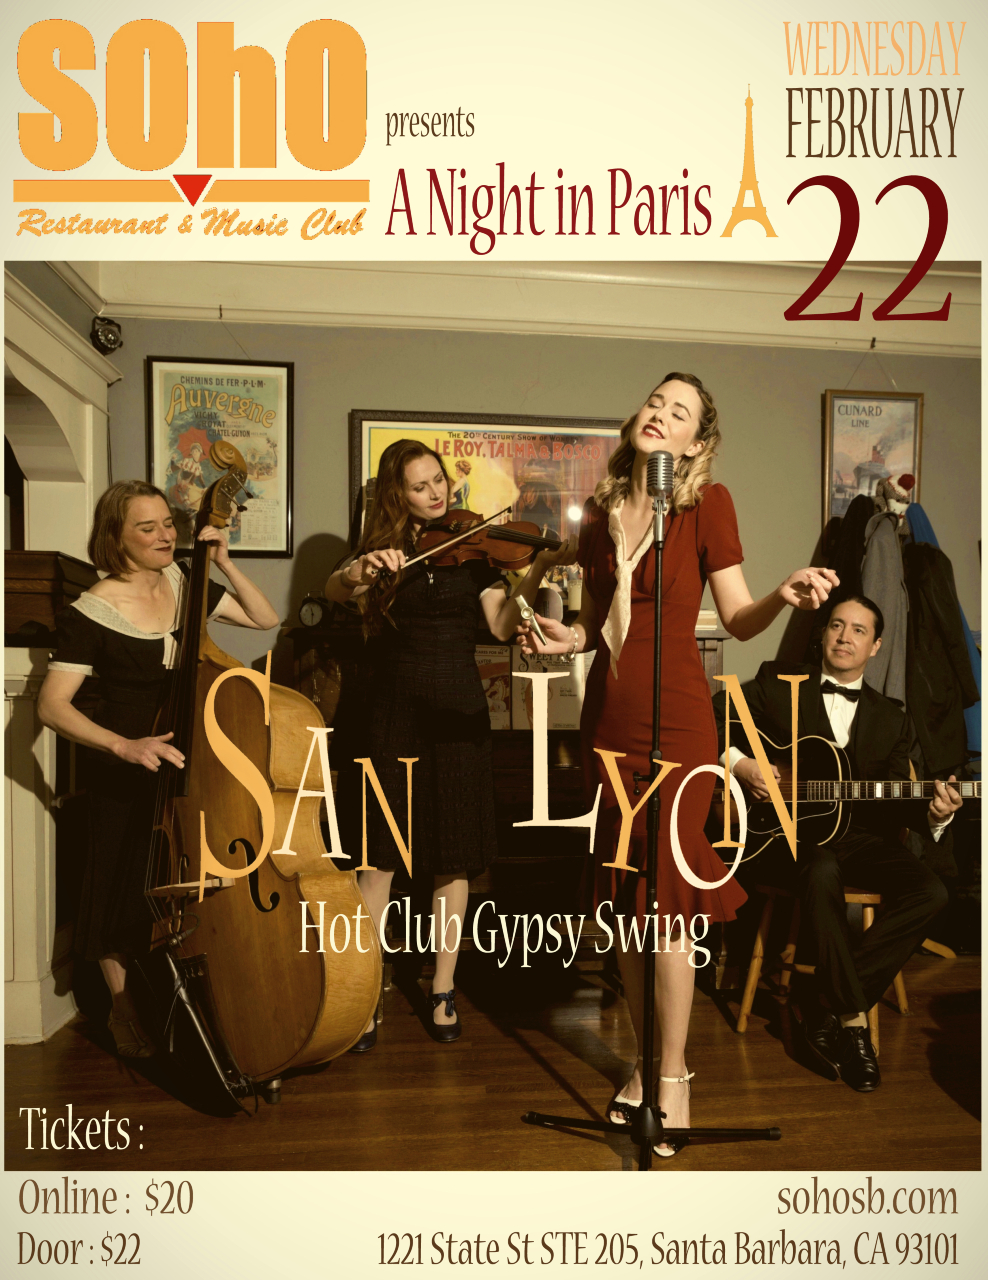 “A Night In Paris” With San Lyon